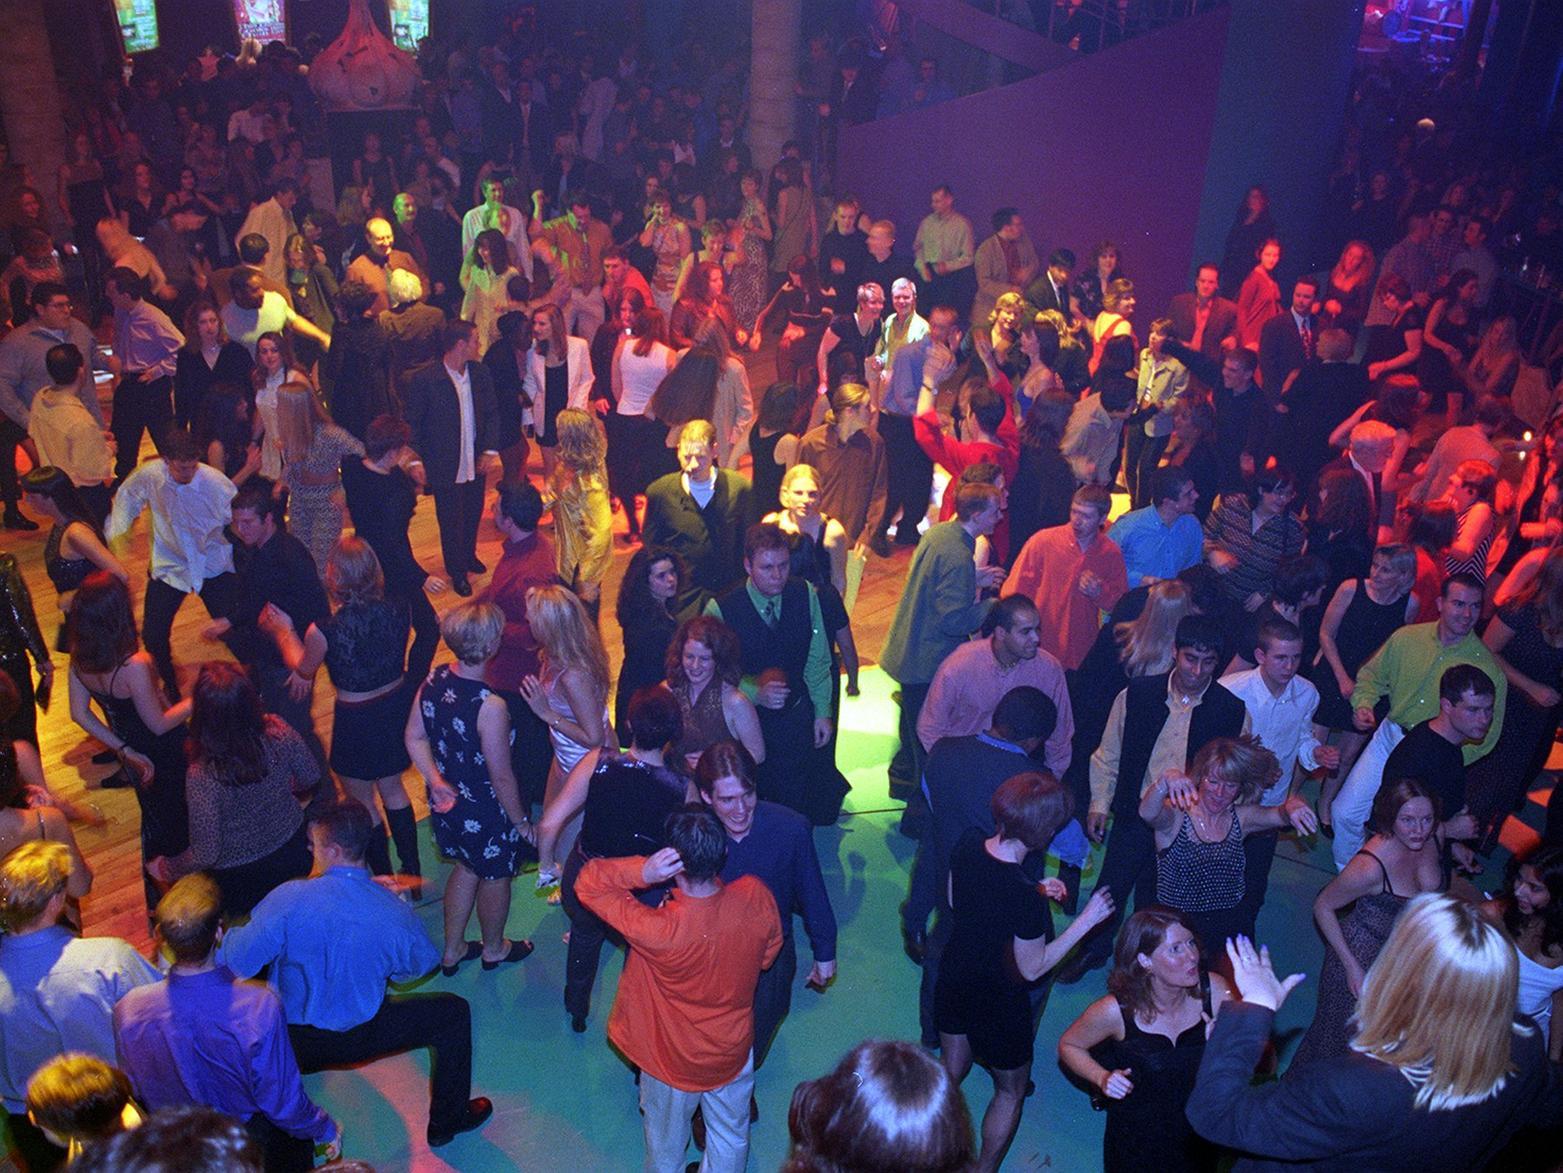 Packed dance floor inside Club Barcelona, Birstall near Leeds.